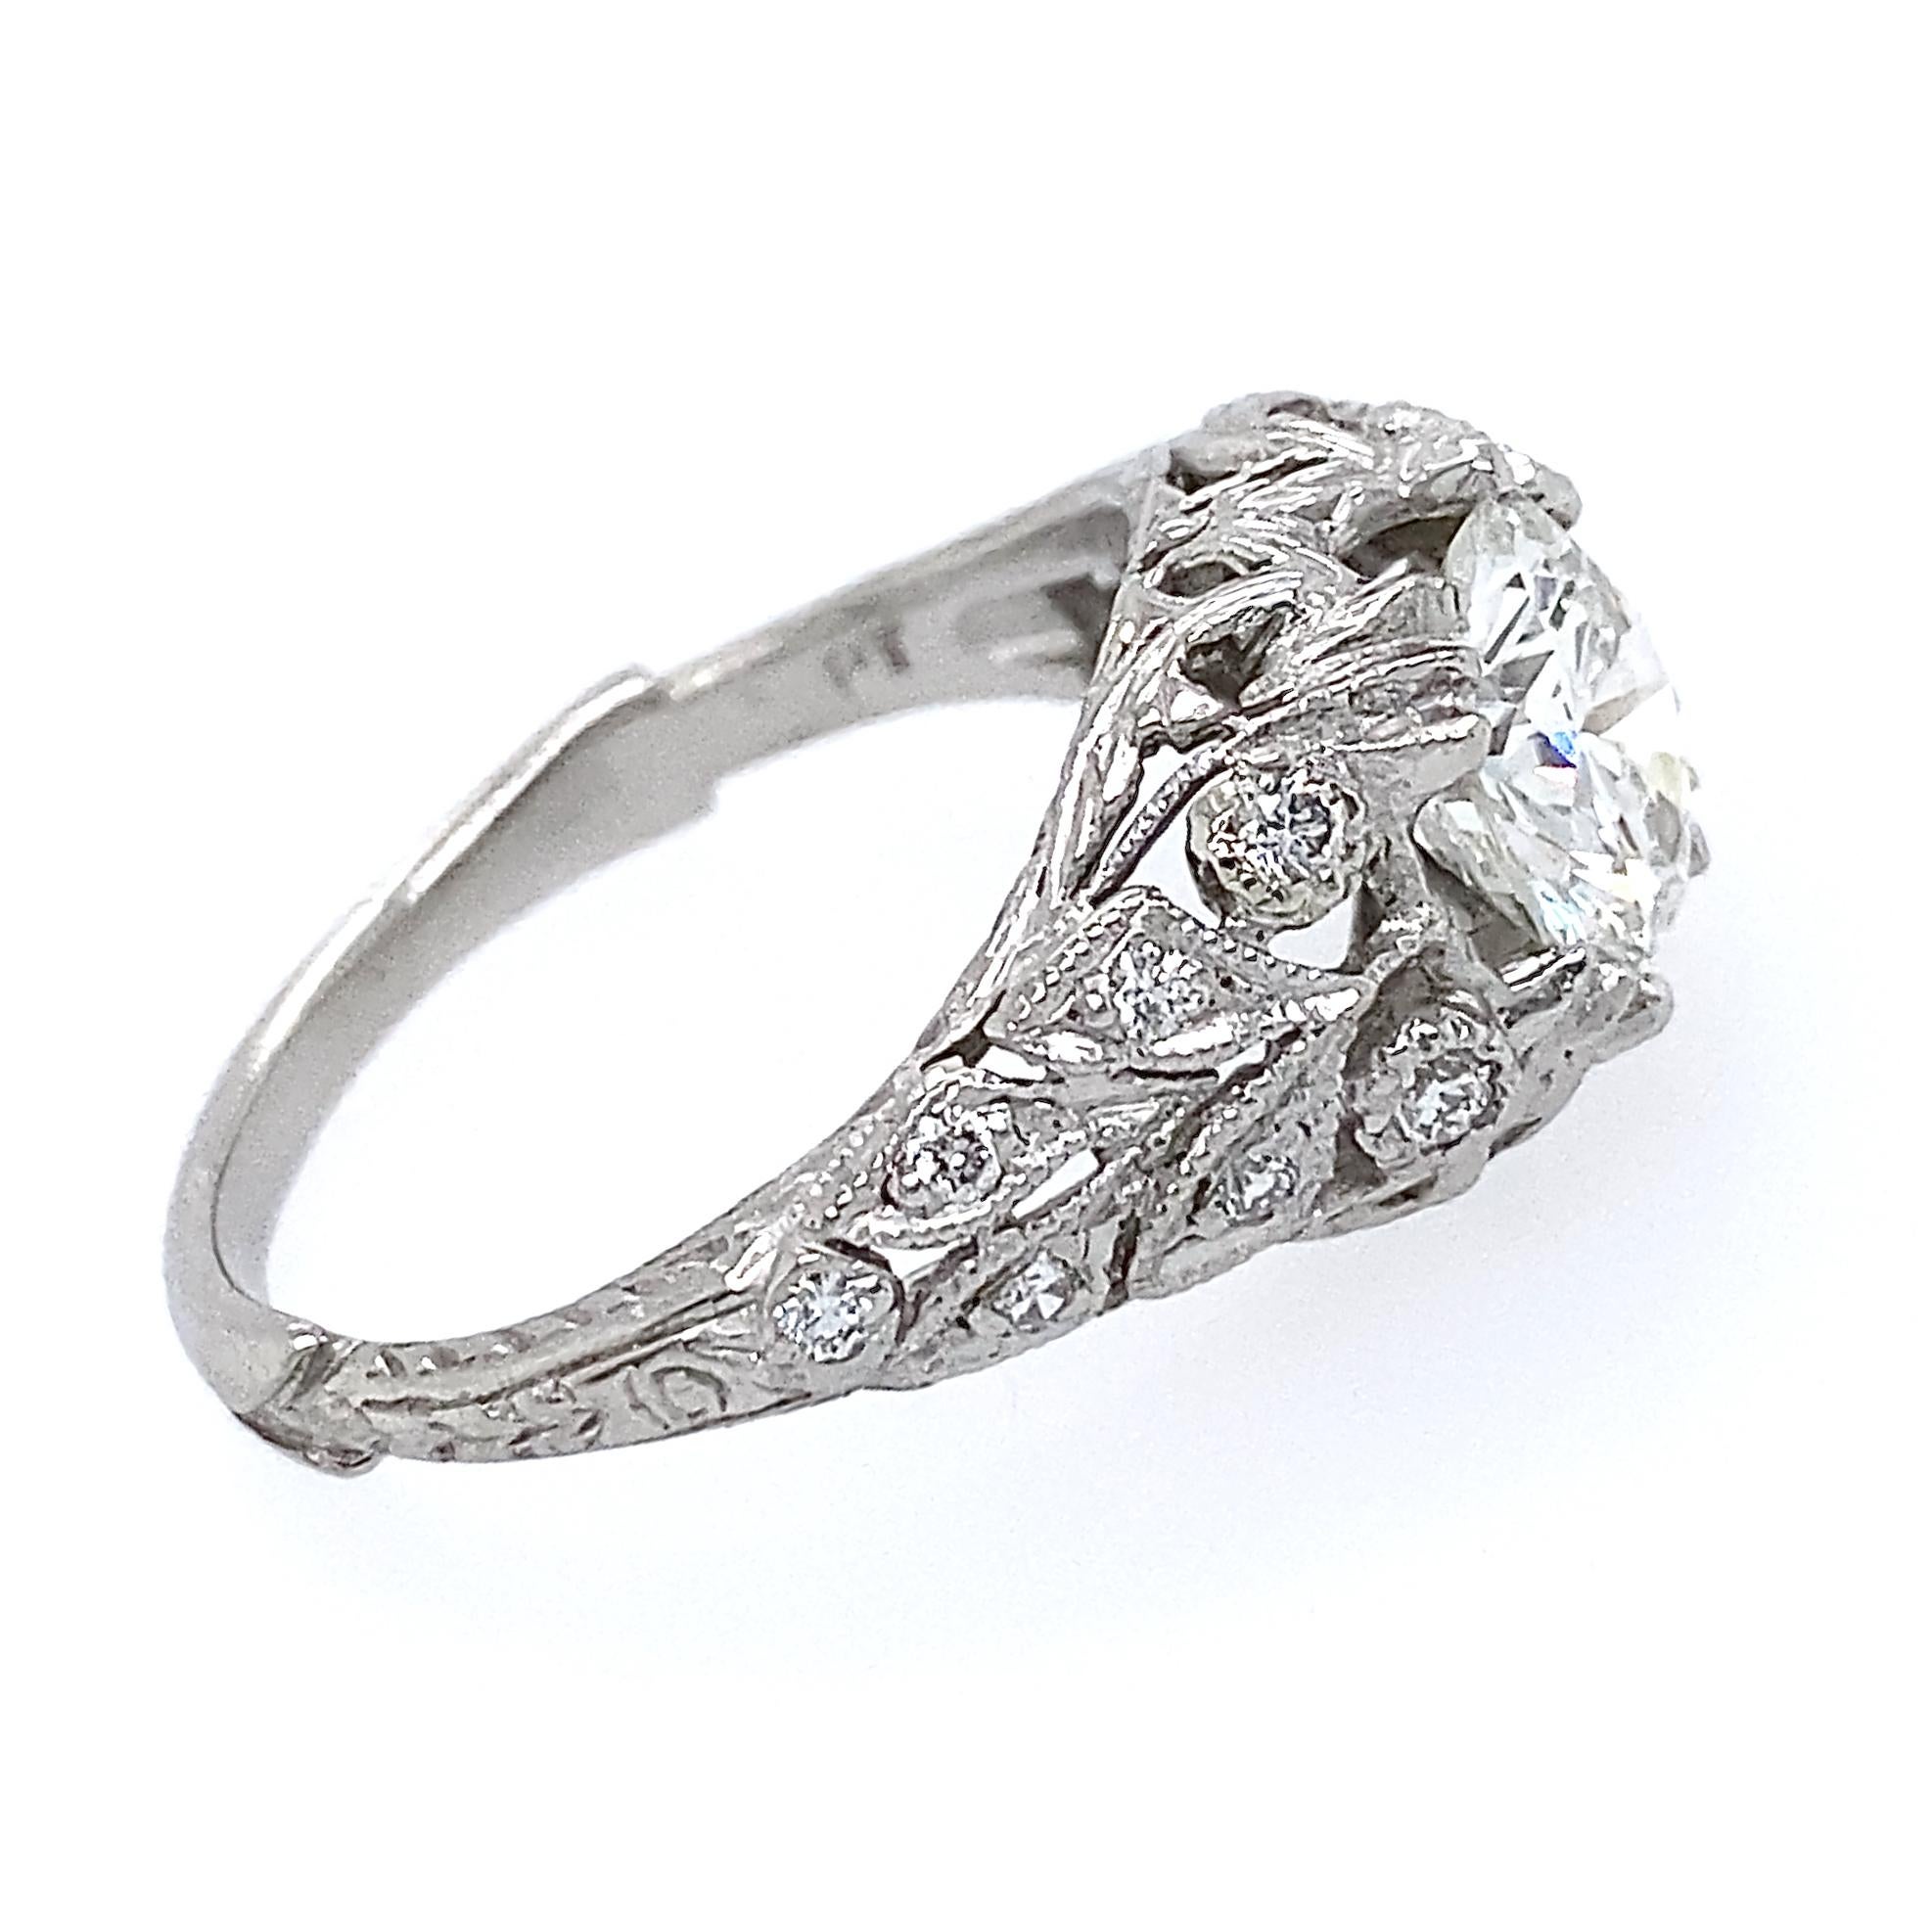 Brilliant Cut Certified 1.14 Carat Diamond in Edwardian-Inspired Platinum Engagement Ring